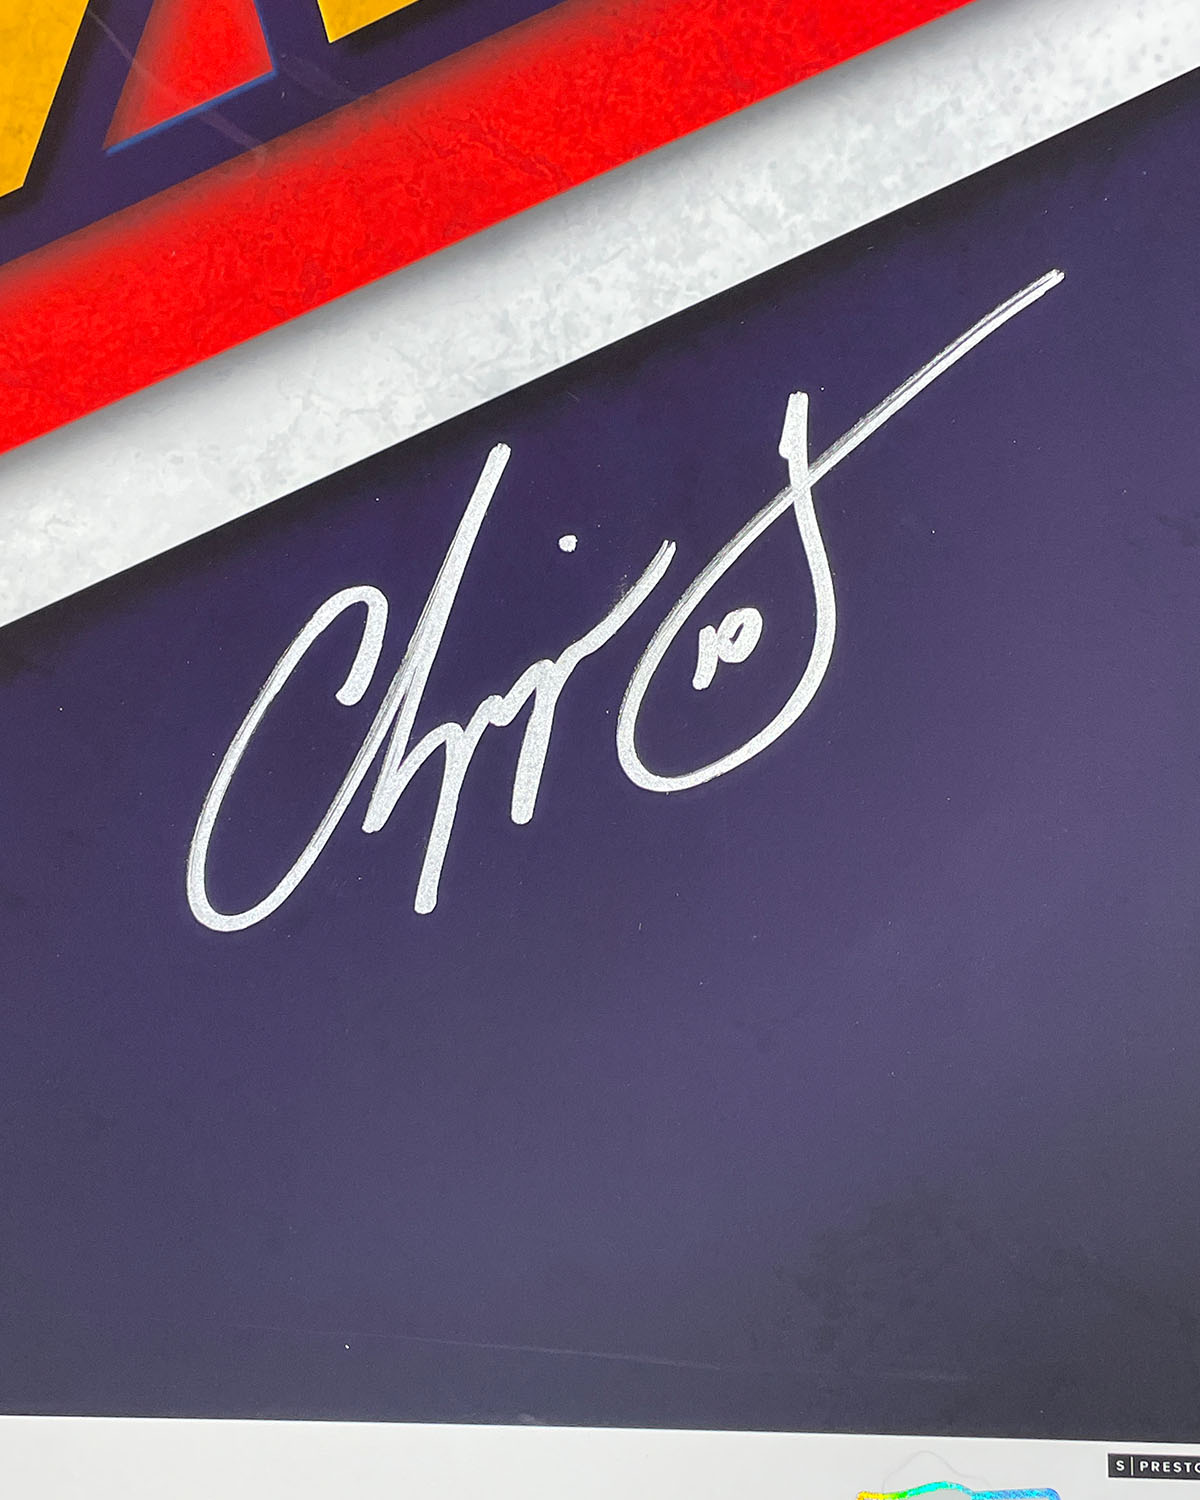 Minimalist Braves Logo - Chipper Jones Autographed - Poster Print - MLB Authenticated